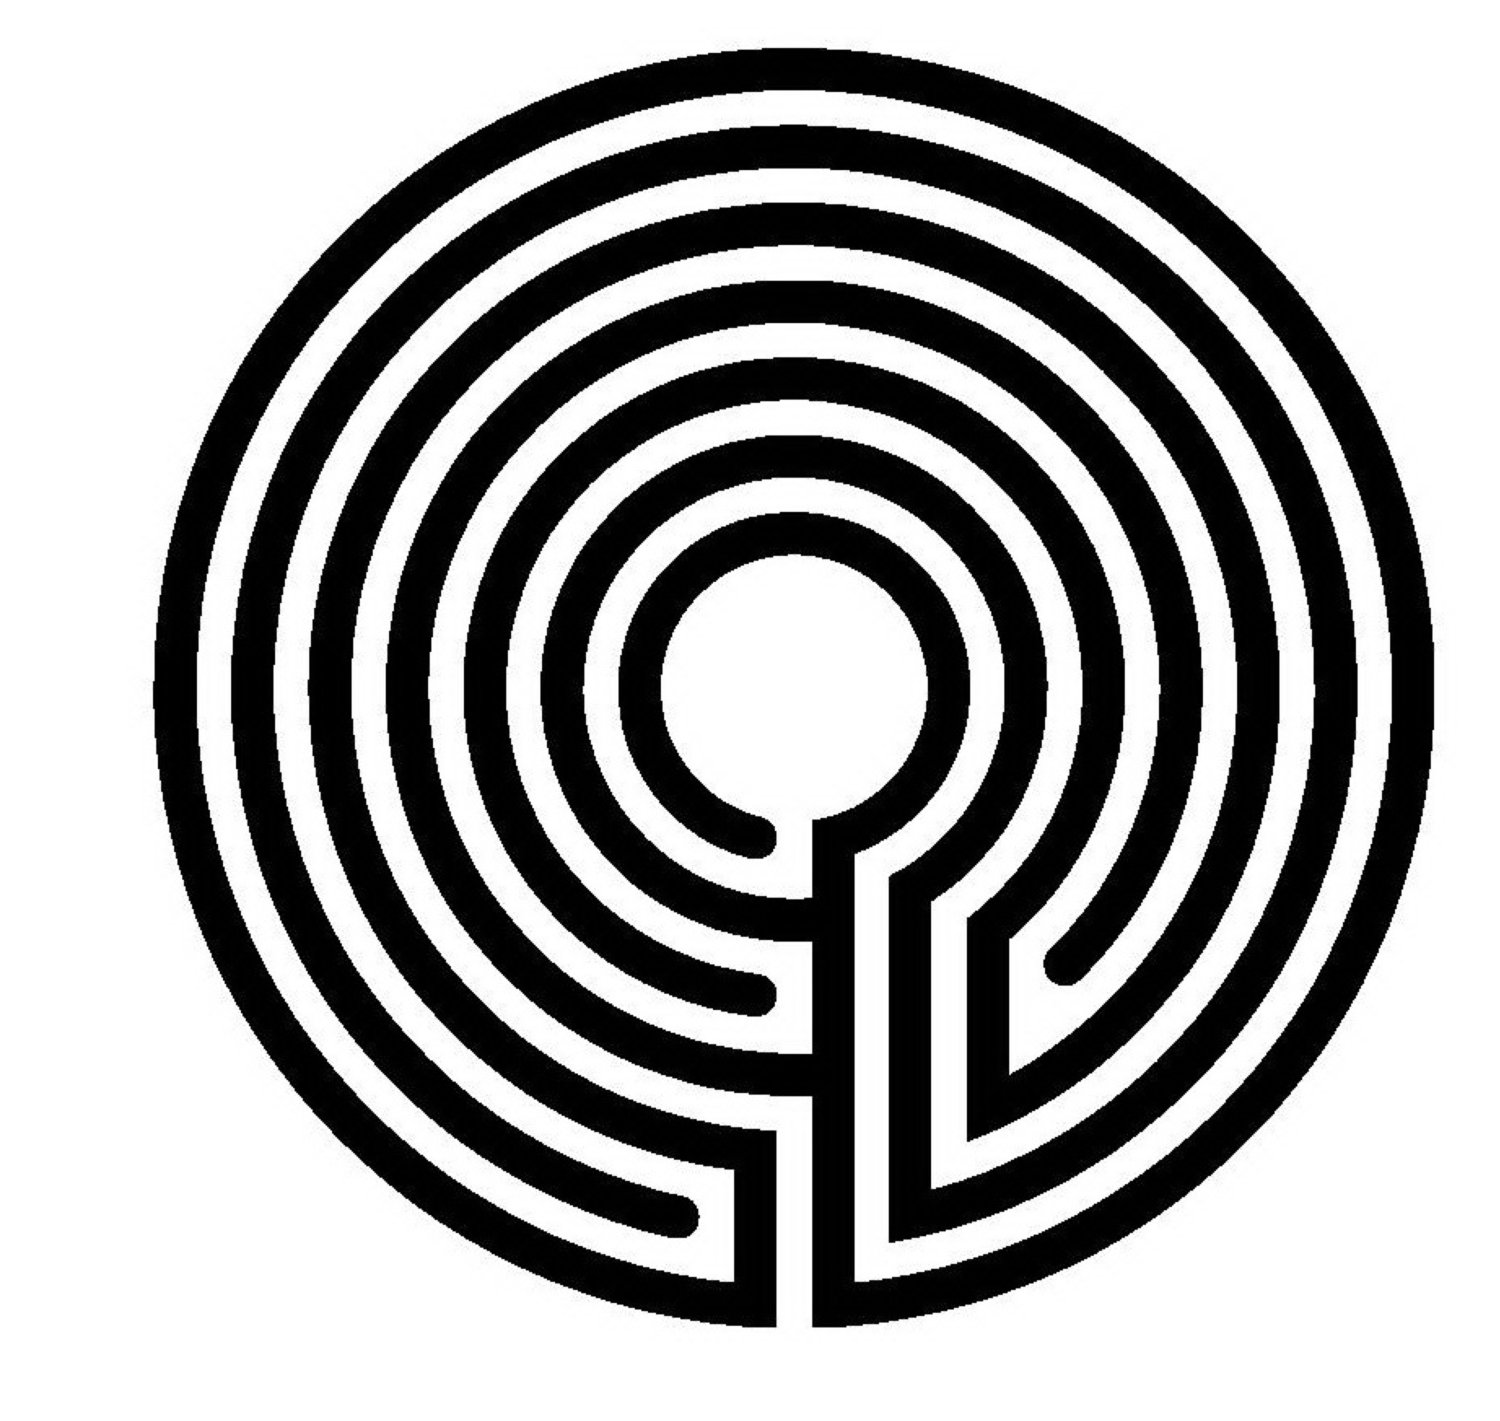 Jericho Meditation Labyrinth, 2019, St. Louis